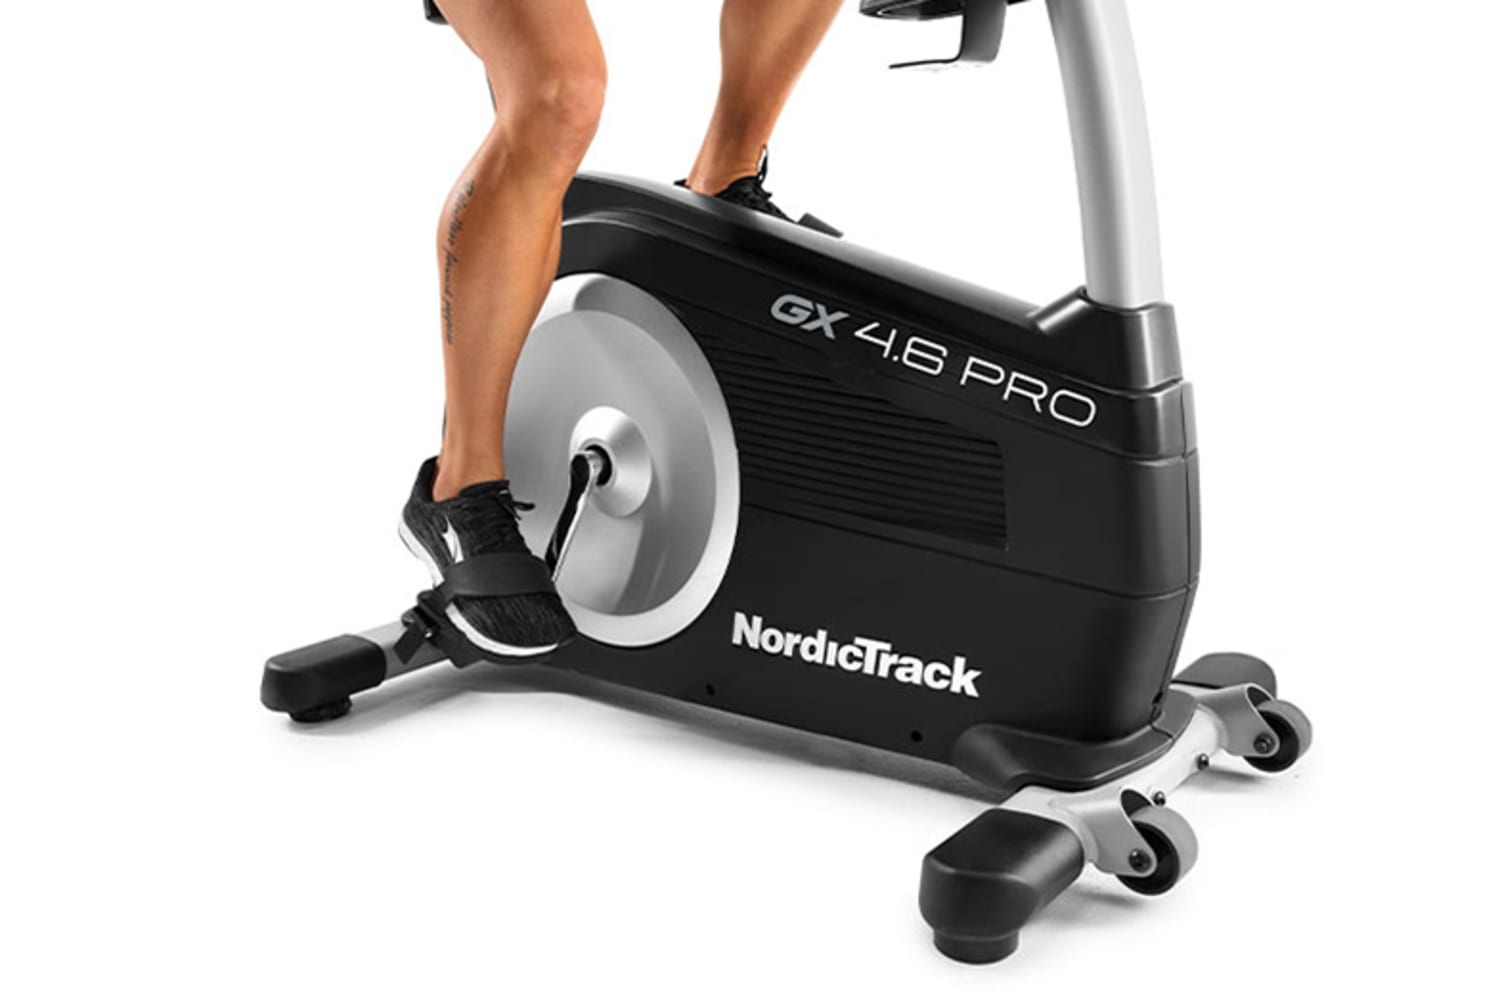 nordictrack gx4 6 pro exercise bike